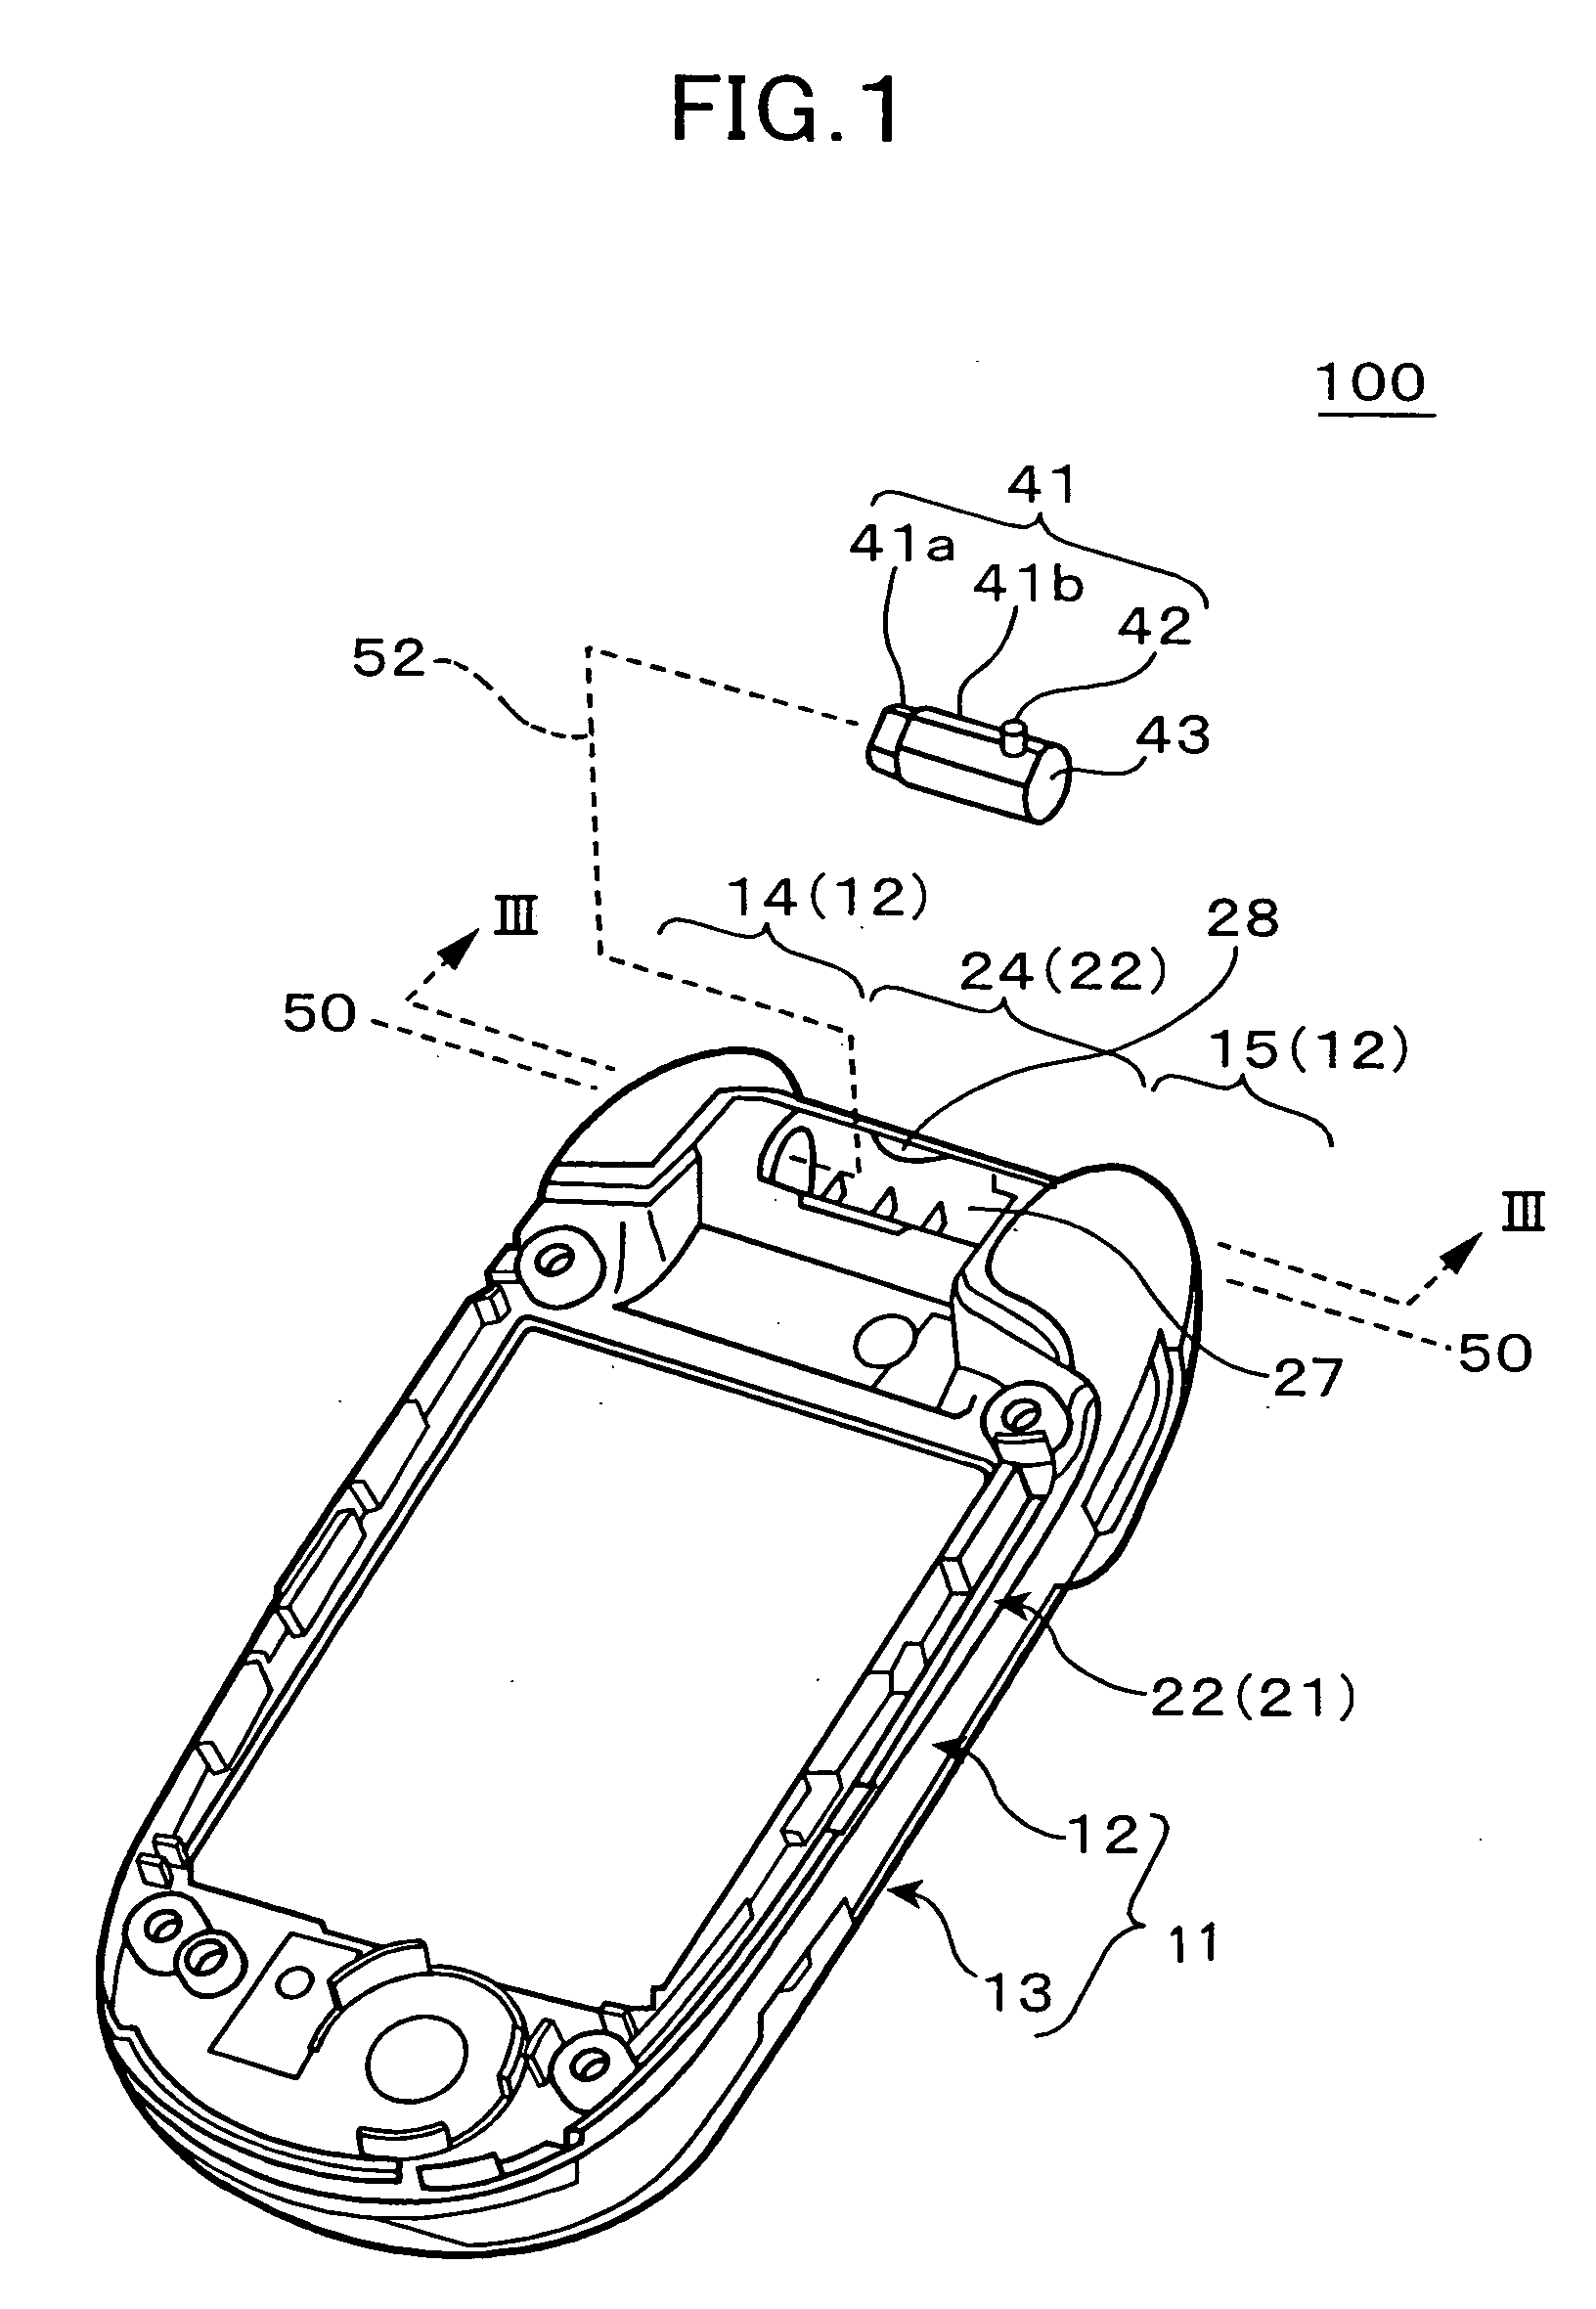 Hinge structure of folding type mobile communication device